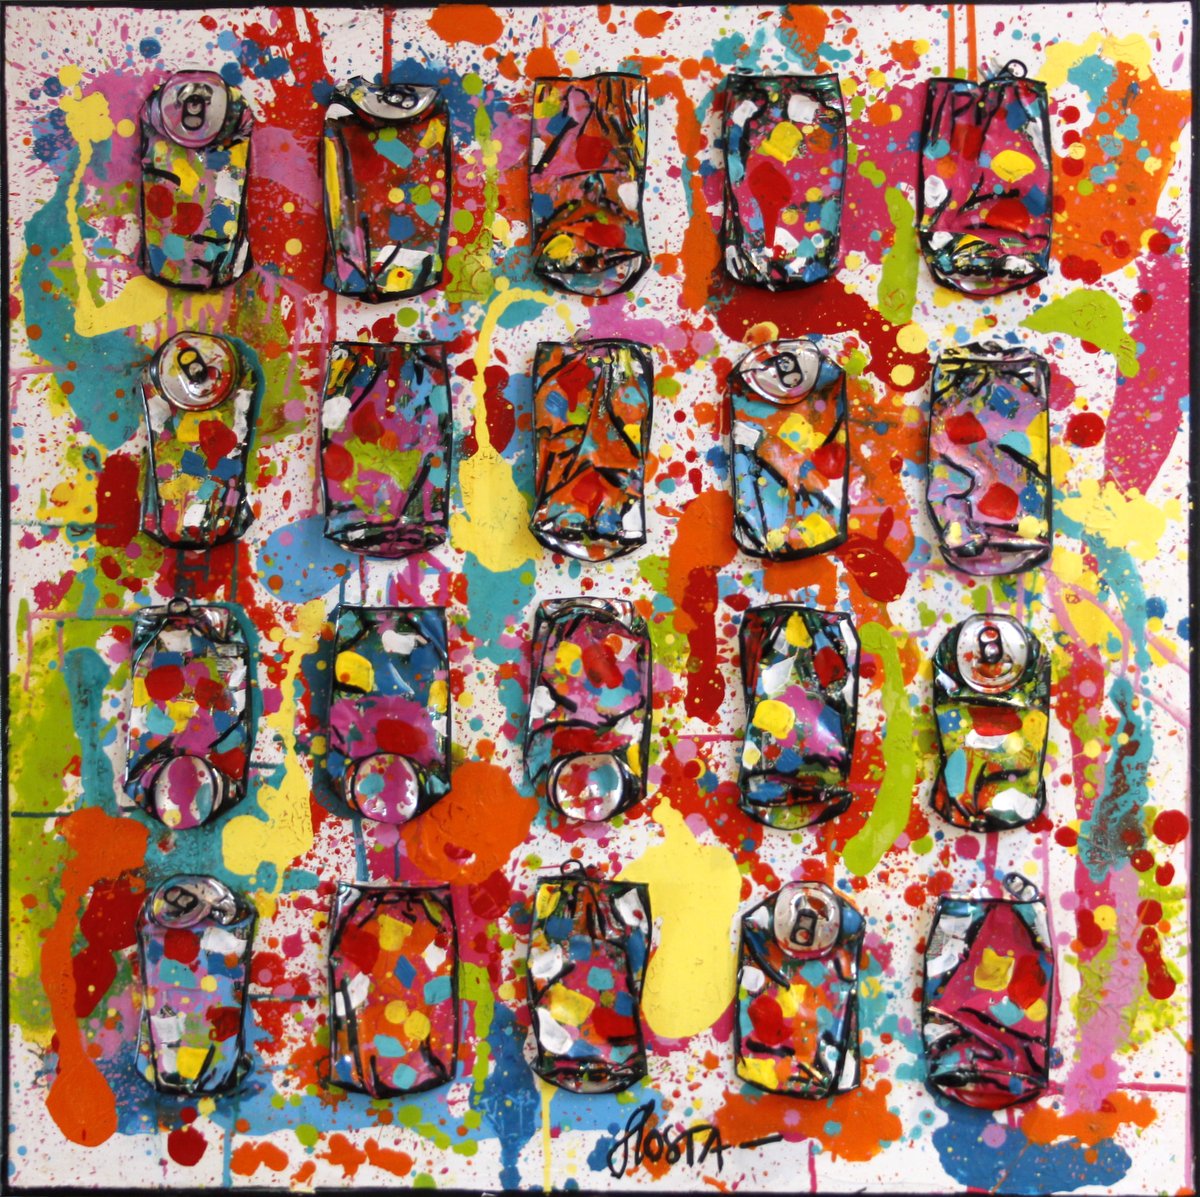 upcycling, collage, colorful Tableau Contemporain, Vital Power. Sophie Costa, artiste peintre.